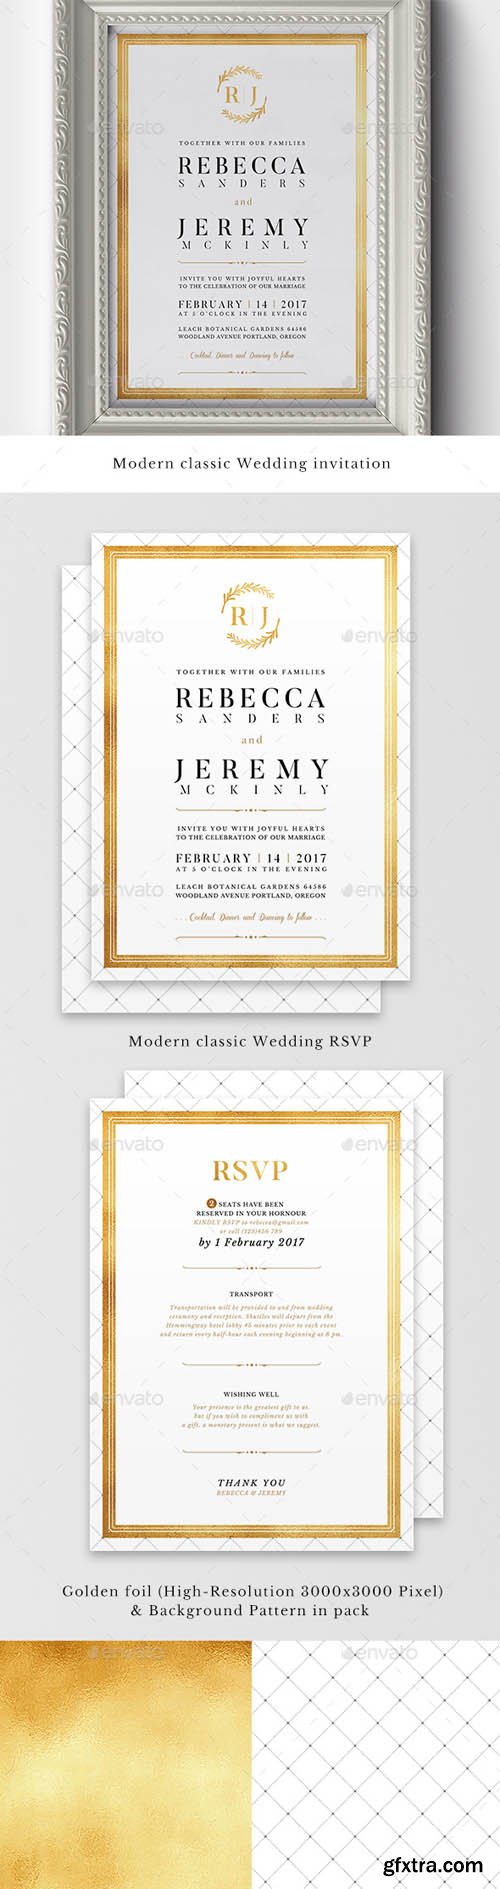 GR - Modern Classic Wedding Invitations 17115774